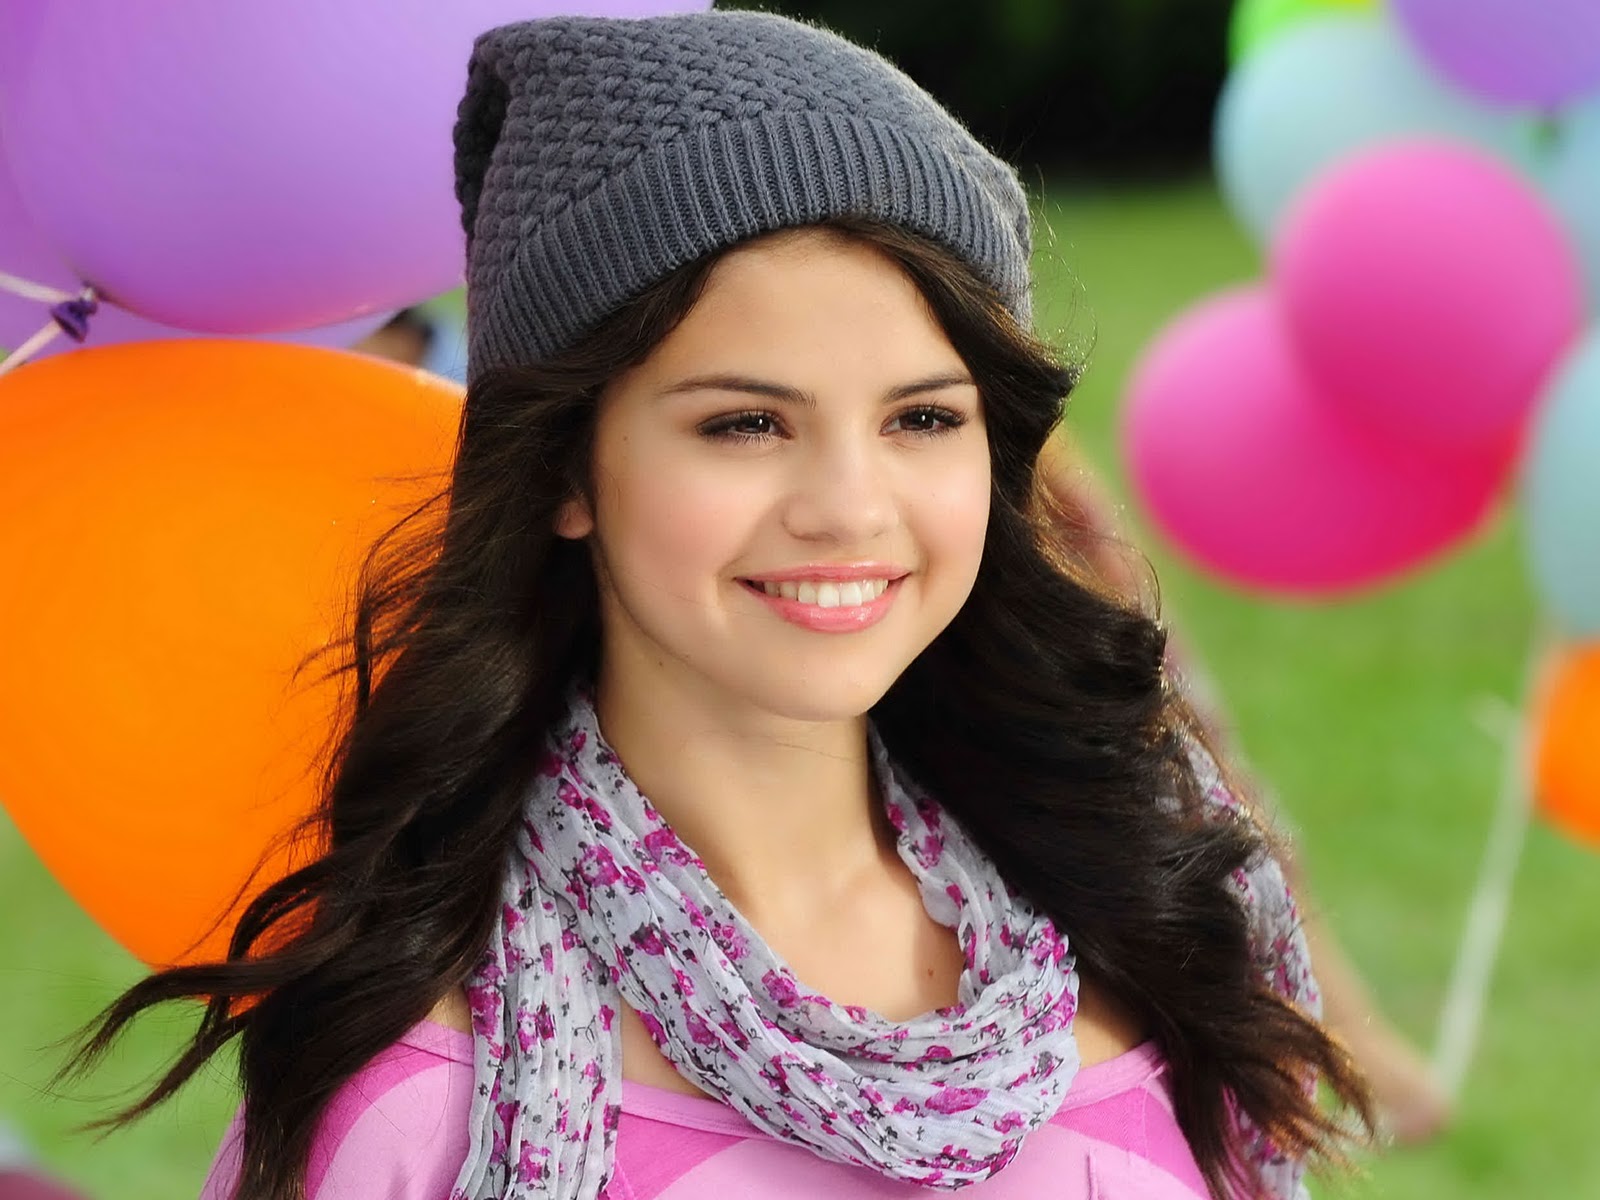 Amazing Selena Gomez Beautiful Smiling Face Look Desktop Background Mobile Free Hd Wallpaper